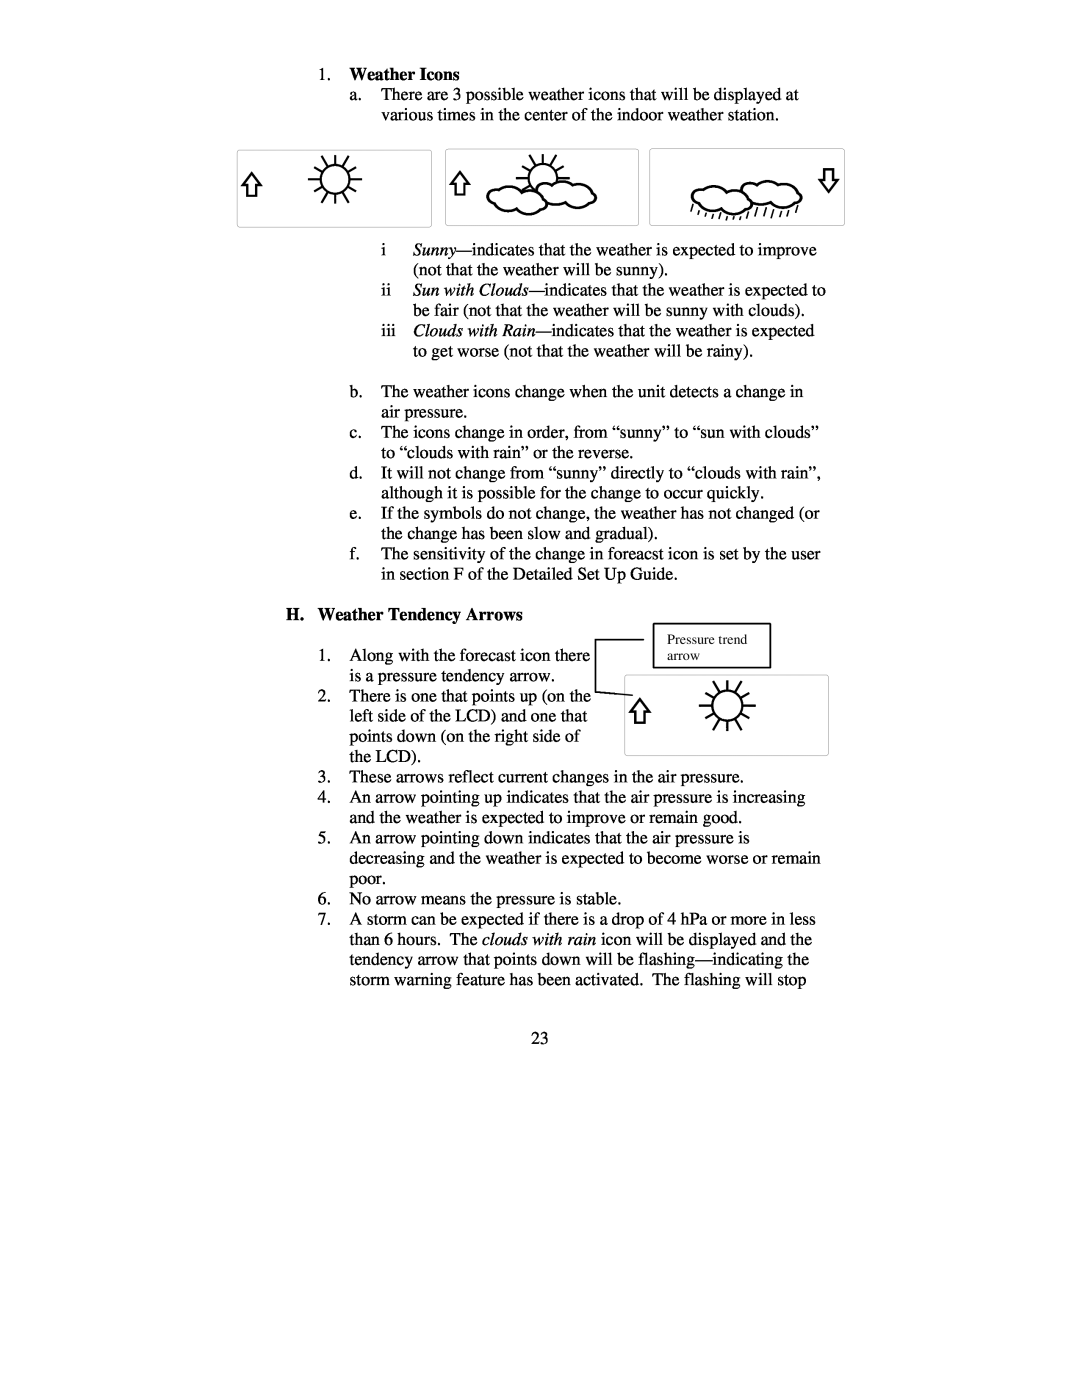 La Crosse Technology WS-8015U instruction manual Weather Icons, H.Weather Tendency Arrows 